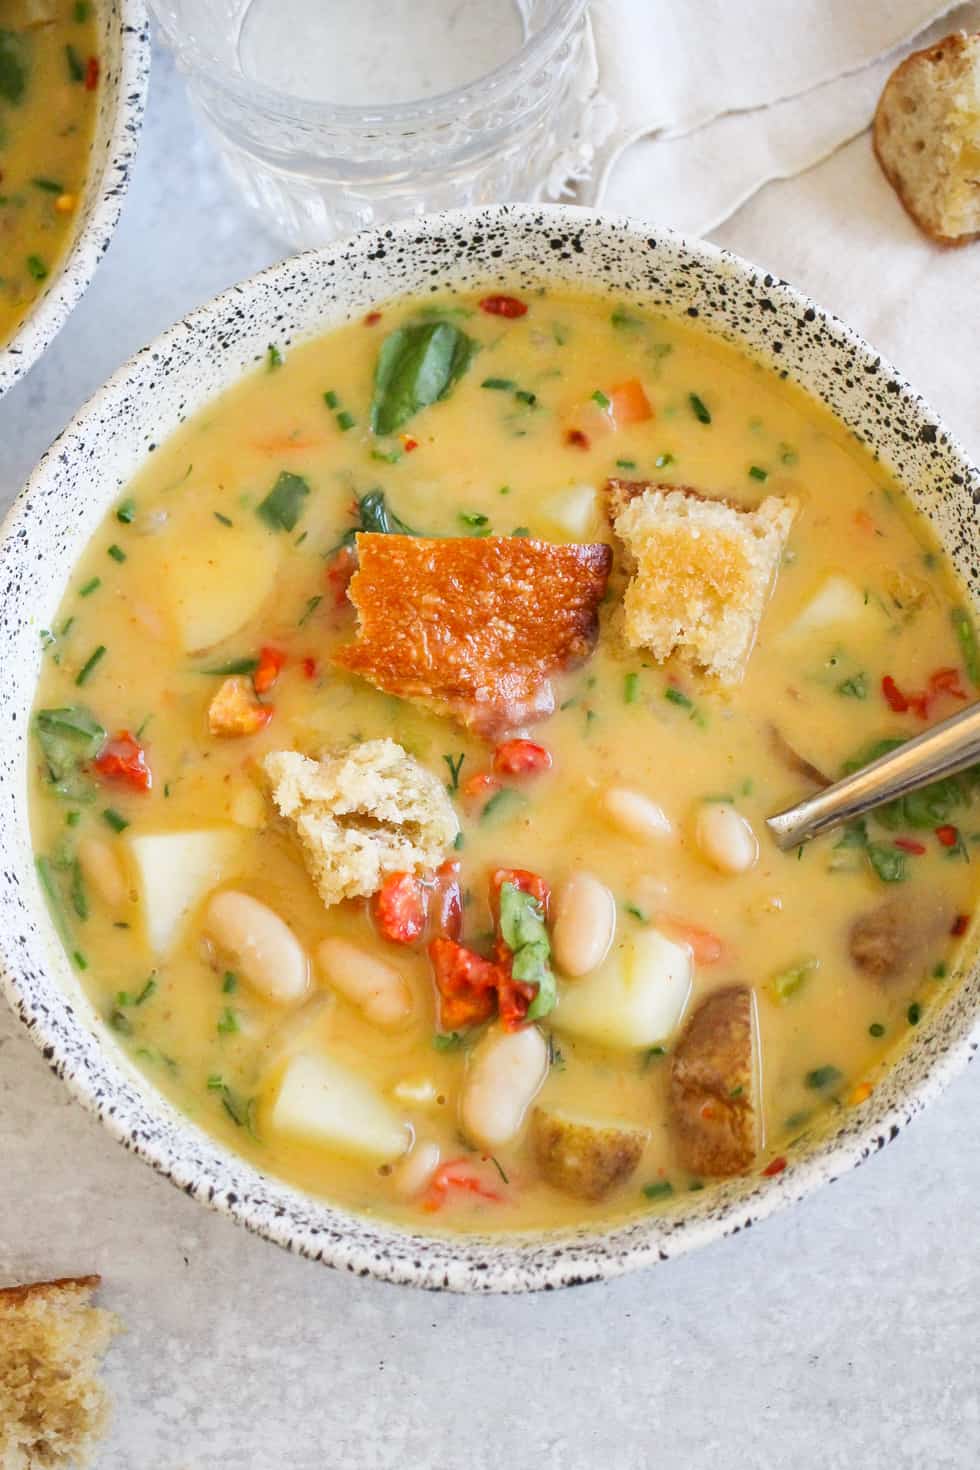 Vegan potato soup in white ceramic bowl against gray background.